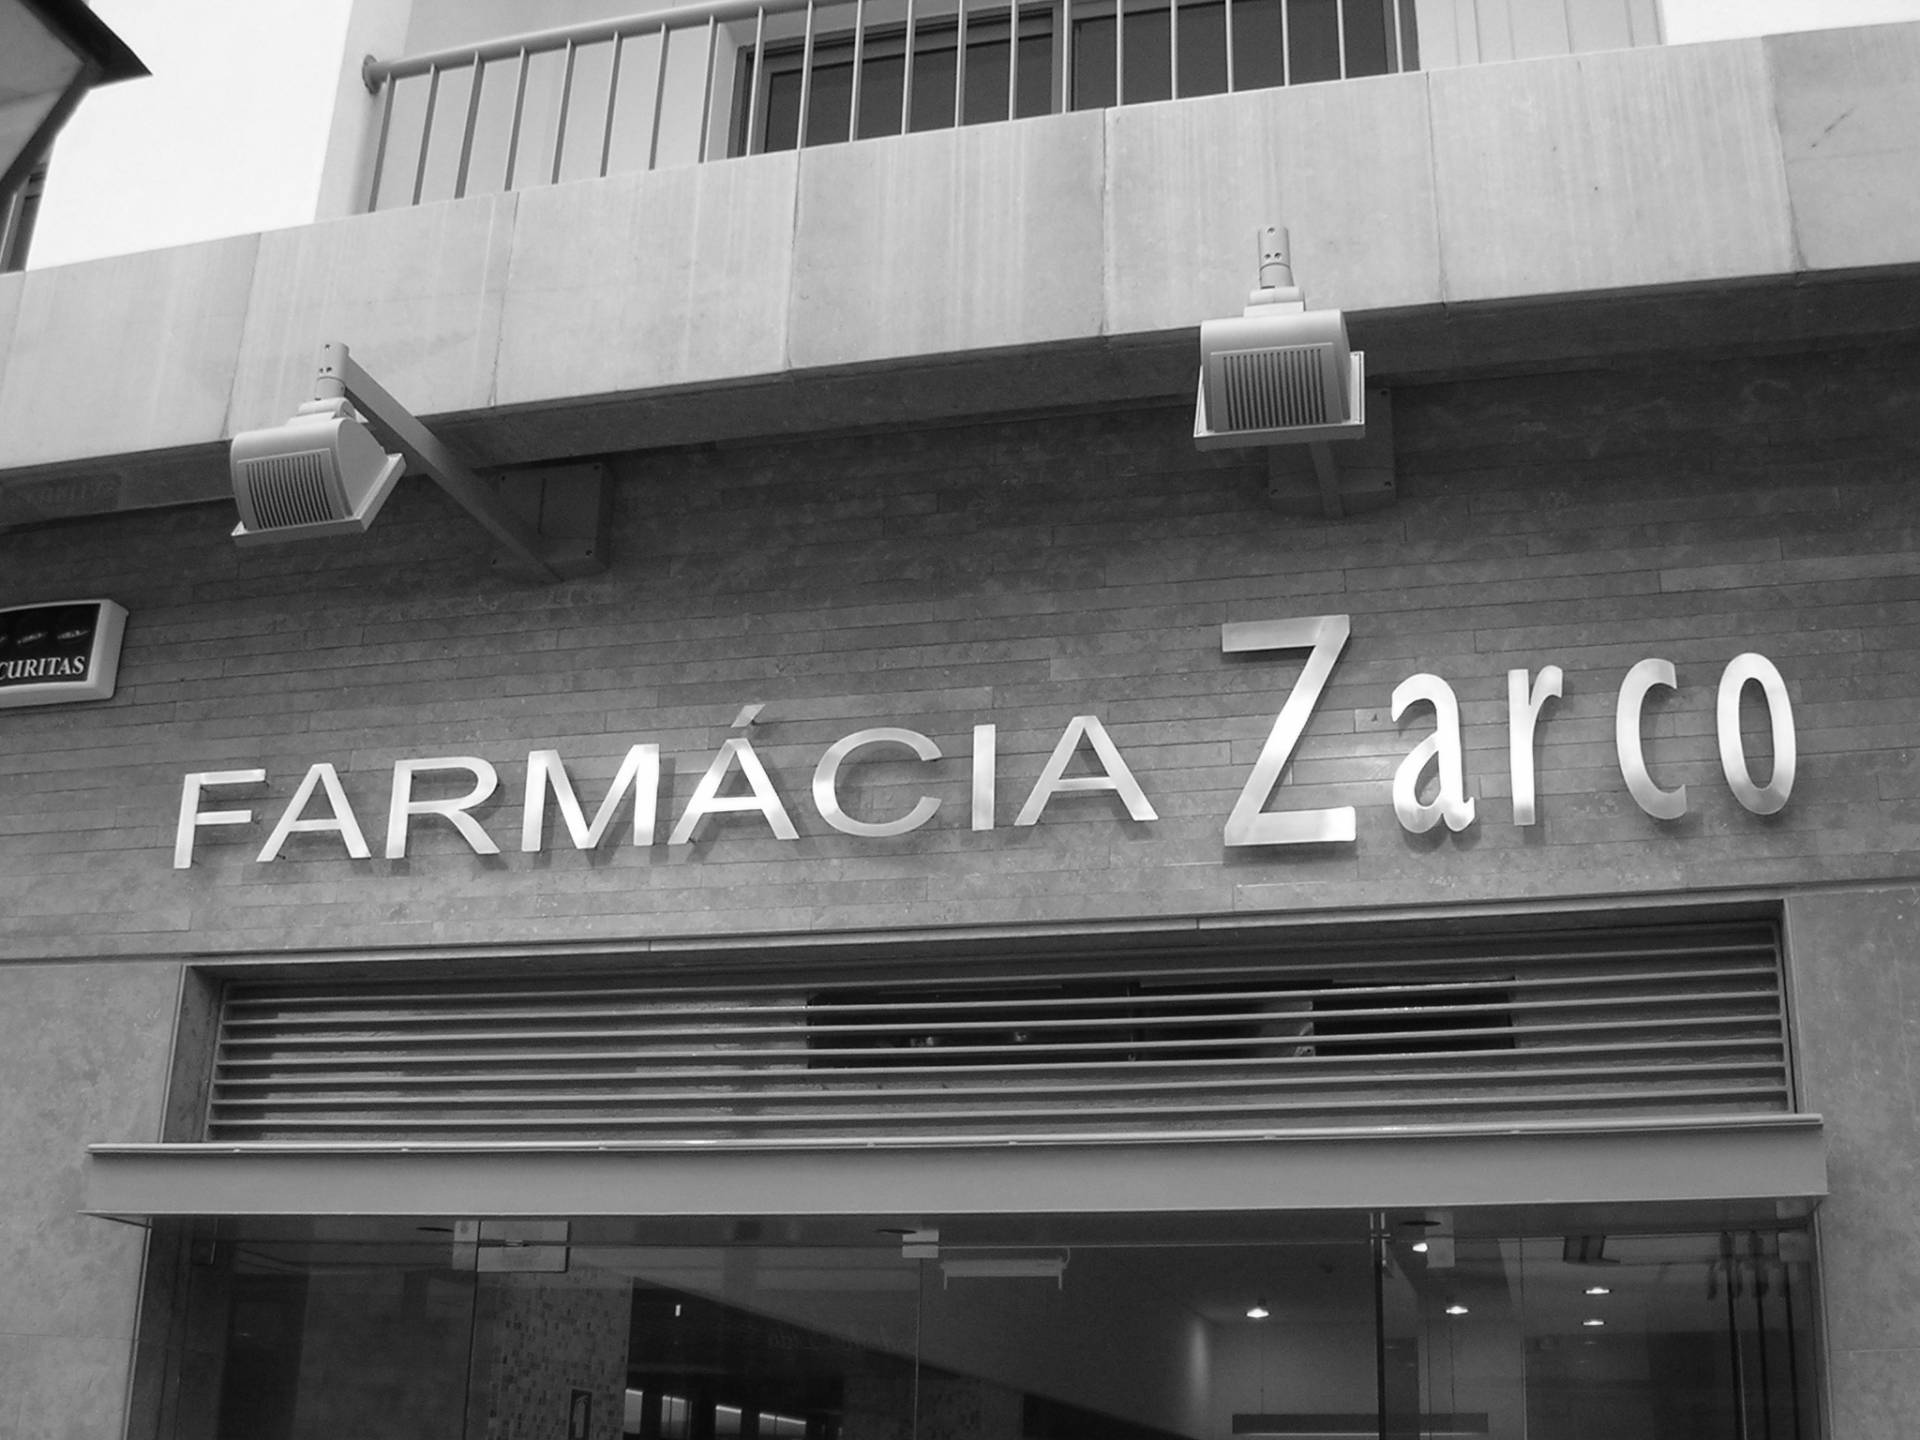 1177-farmacia-zarco-005.jpg